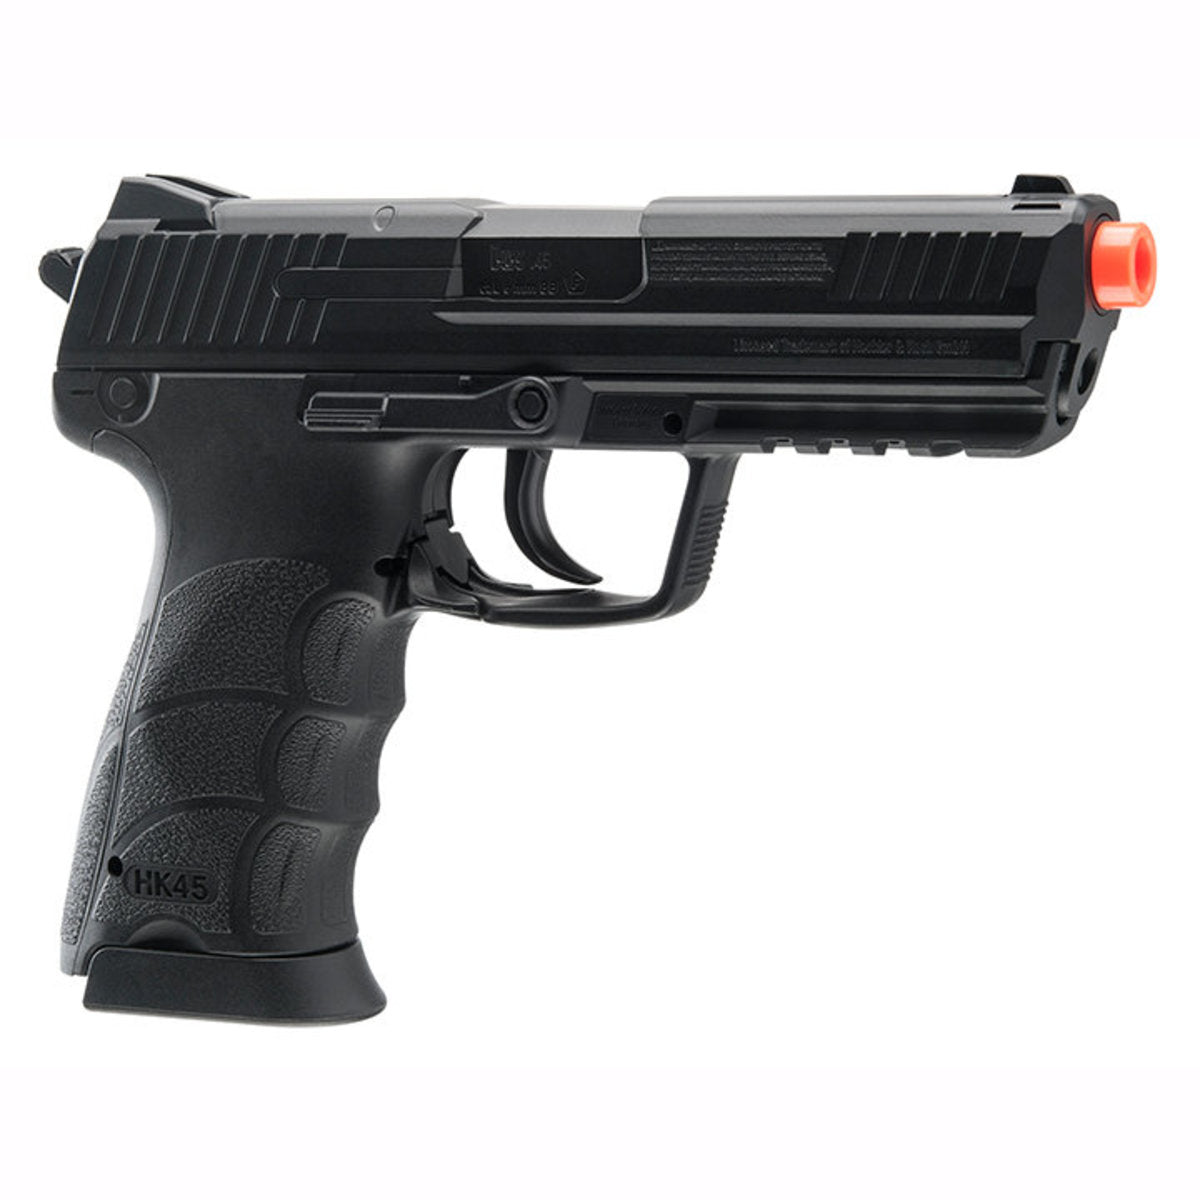 Umarex H&K 45 Co2 Non-Blowback Airsoft Pistol